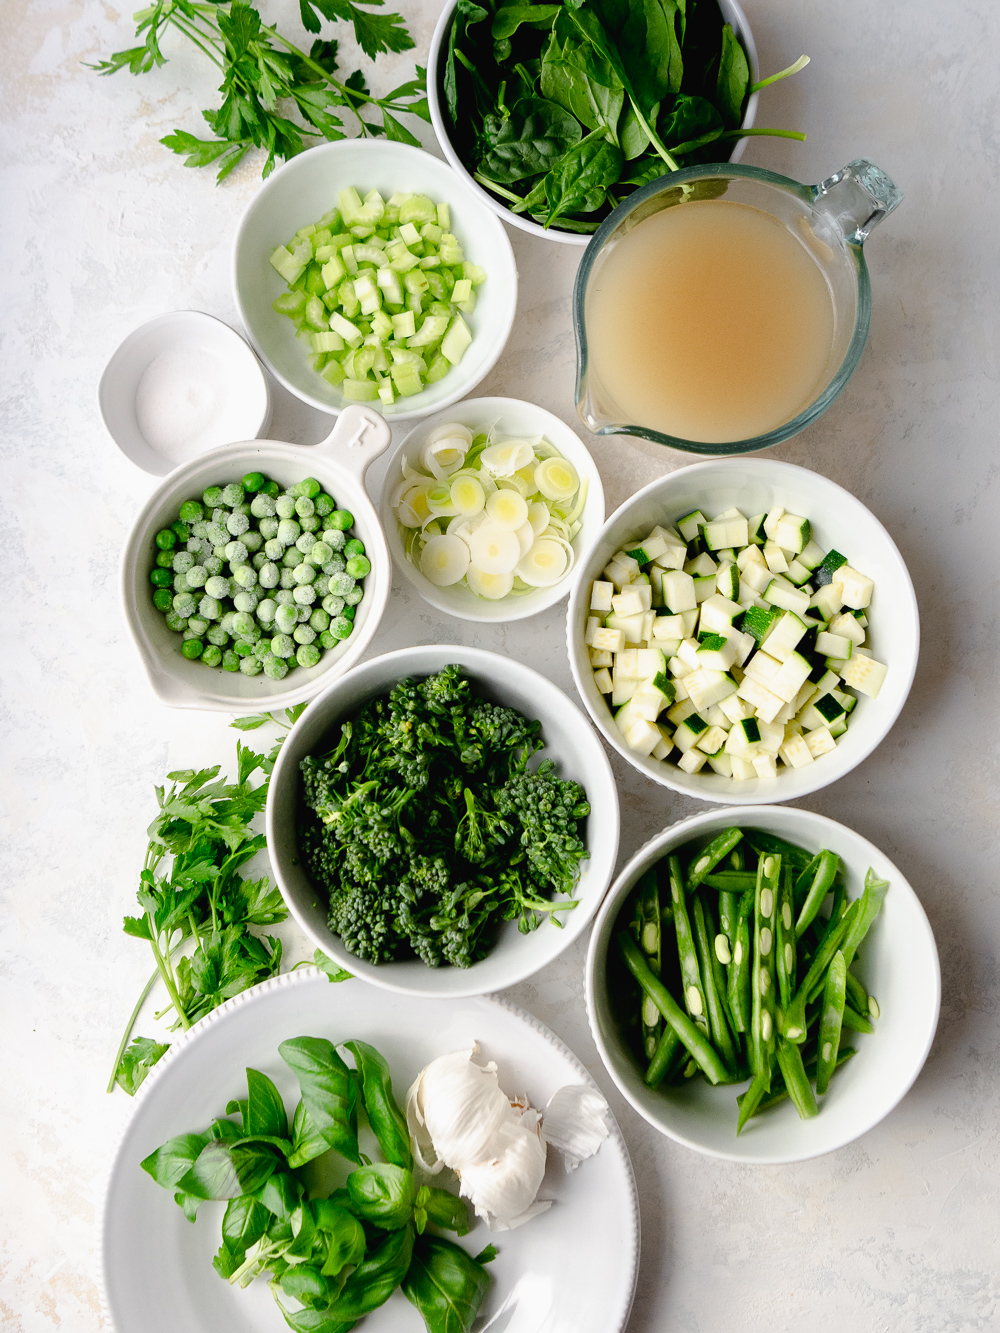 Green minestrone ingredients arranged in bowls - baby spinach, leeks, garlic, celery, frozen peas, broccolini, stringbeans, chicken broth, garlic, basil and parsley